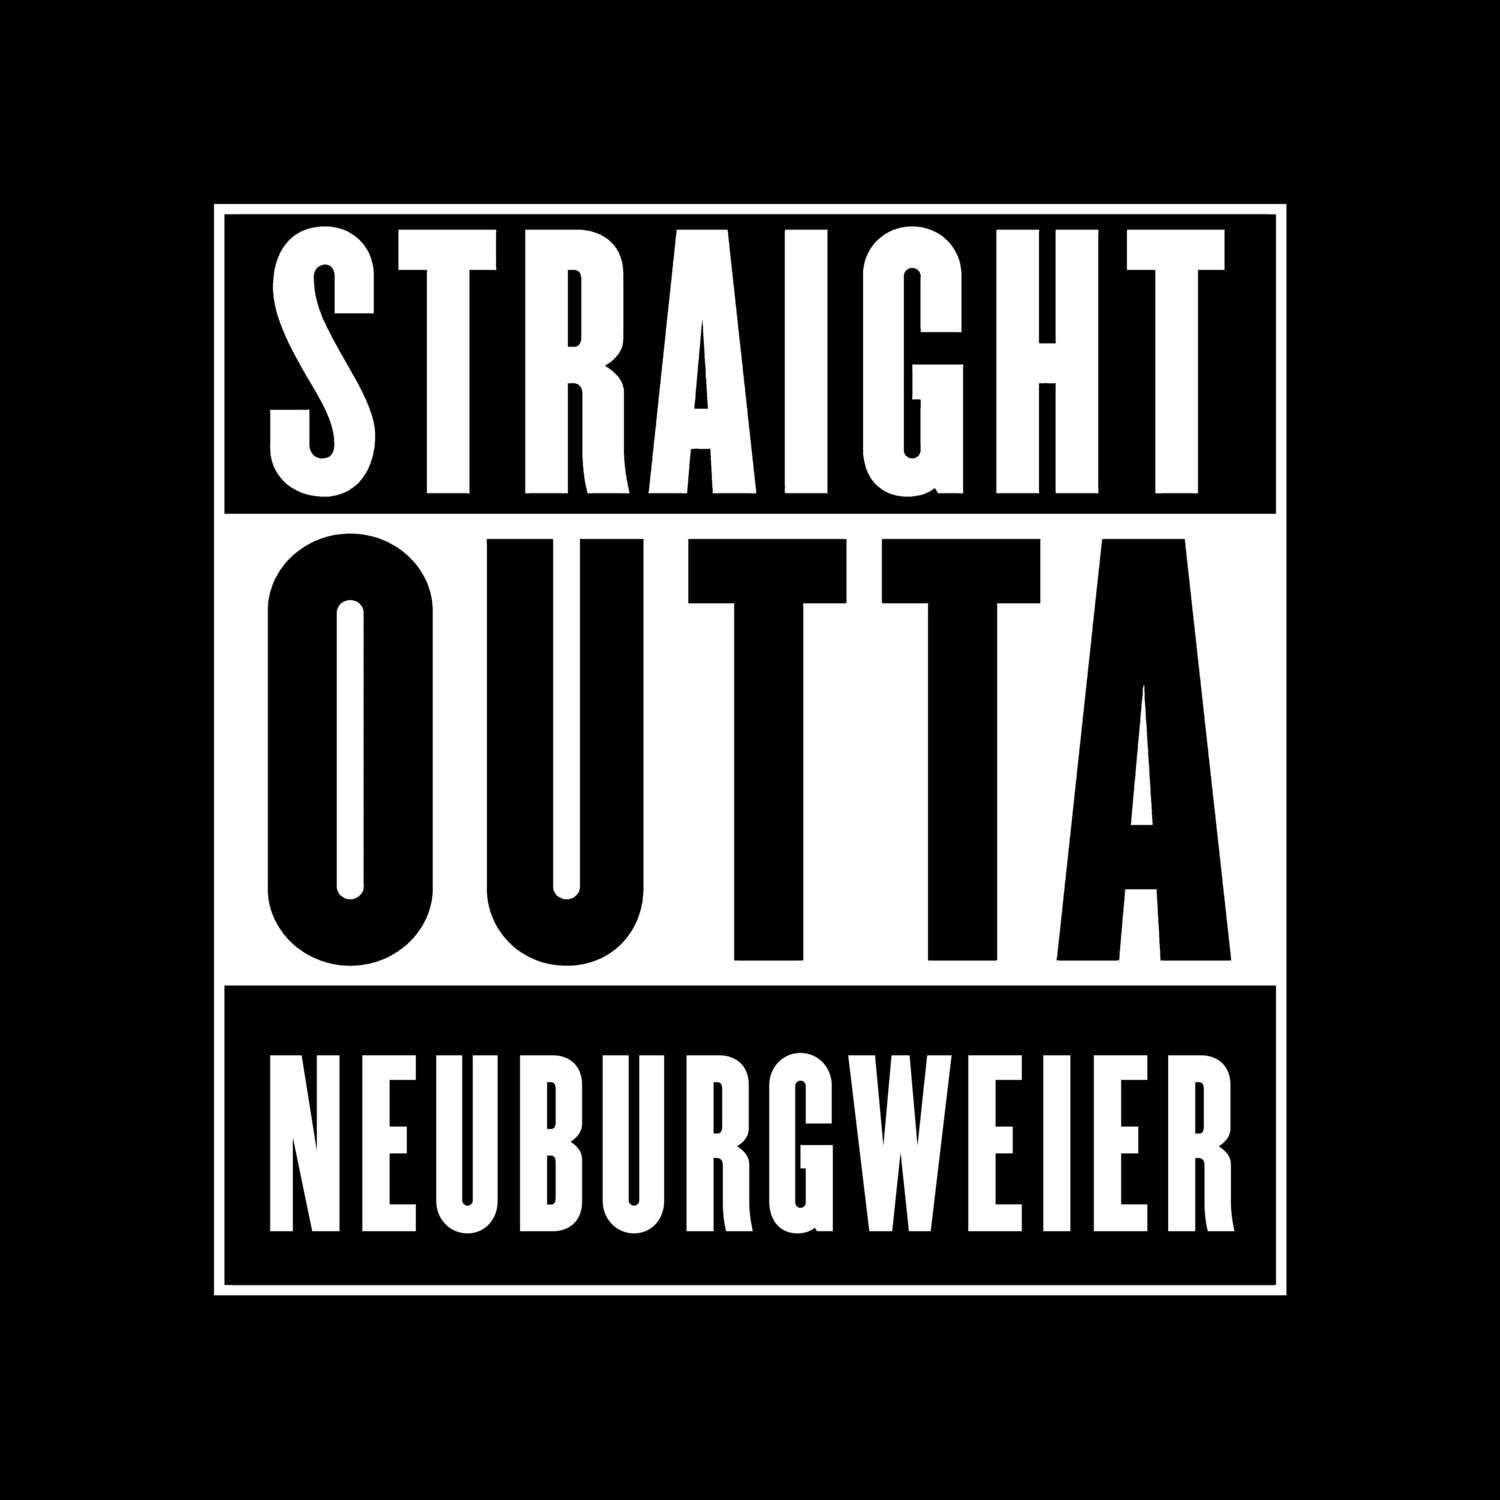 Neuburgweier T-Shirt »Straight Outta«